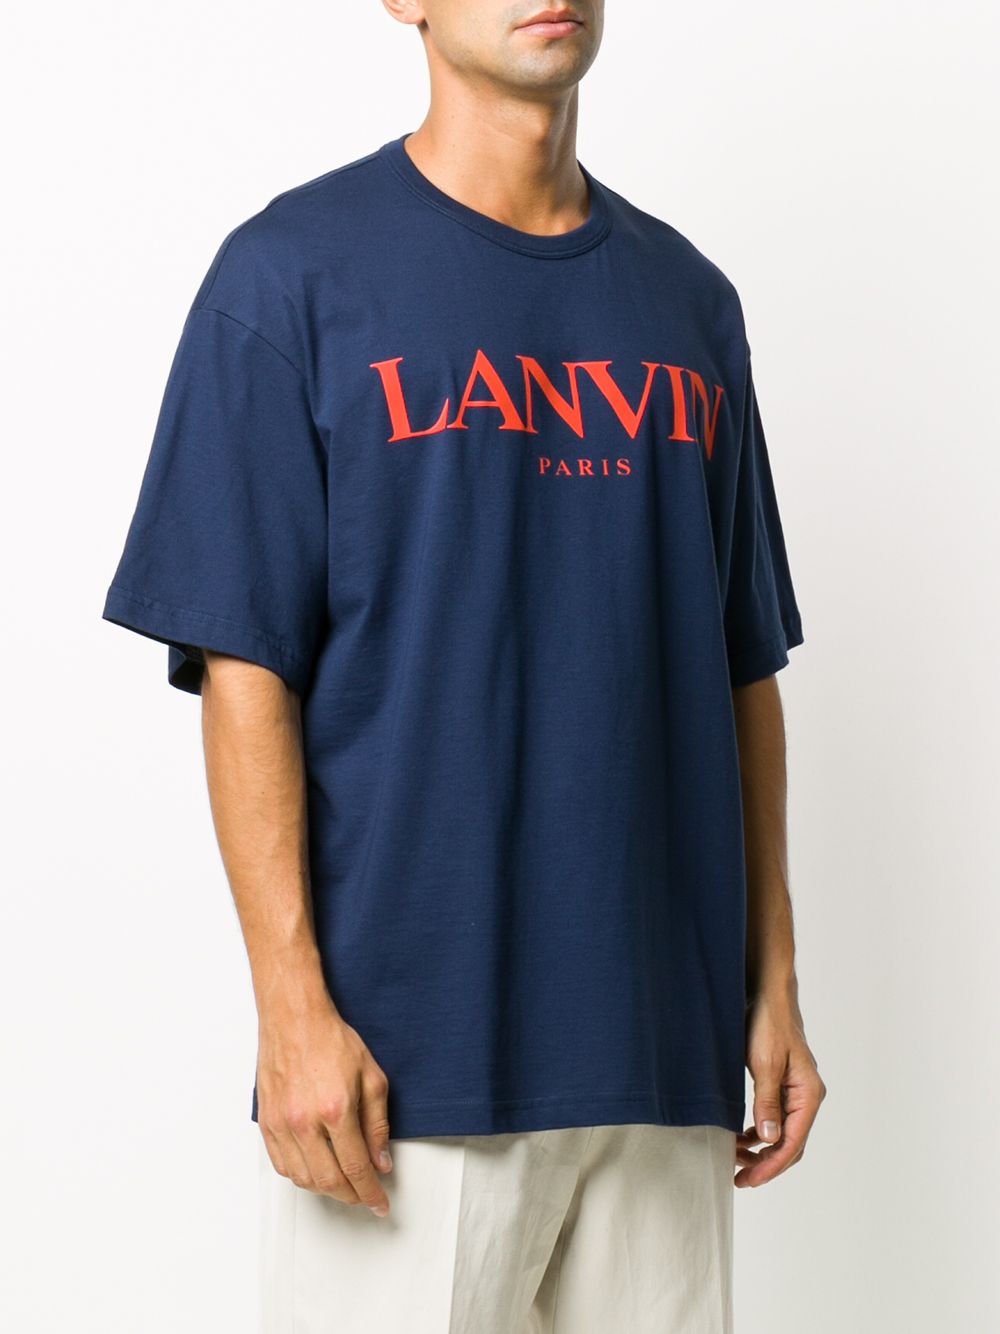 фото Lanvin футболка оверсайз с логотипом